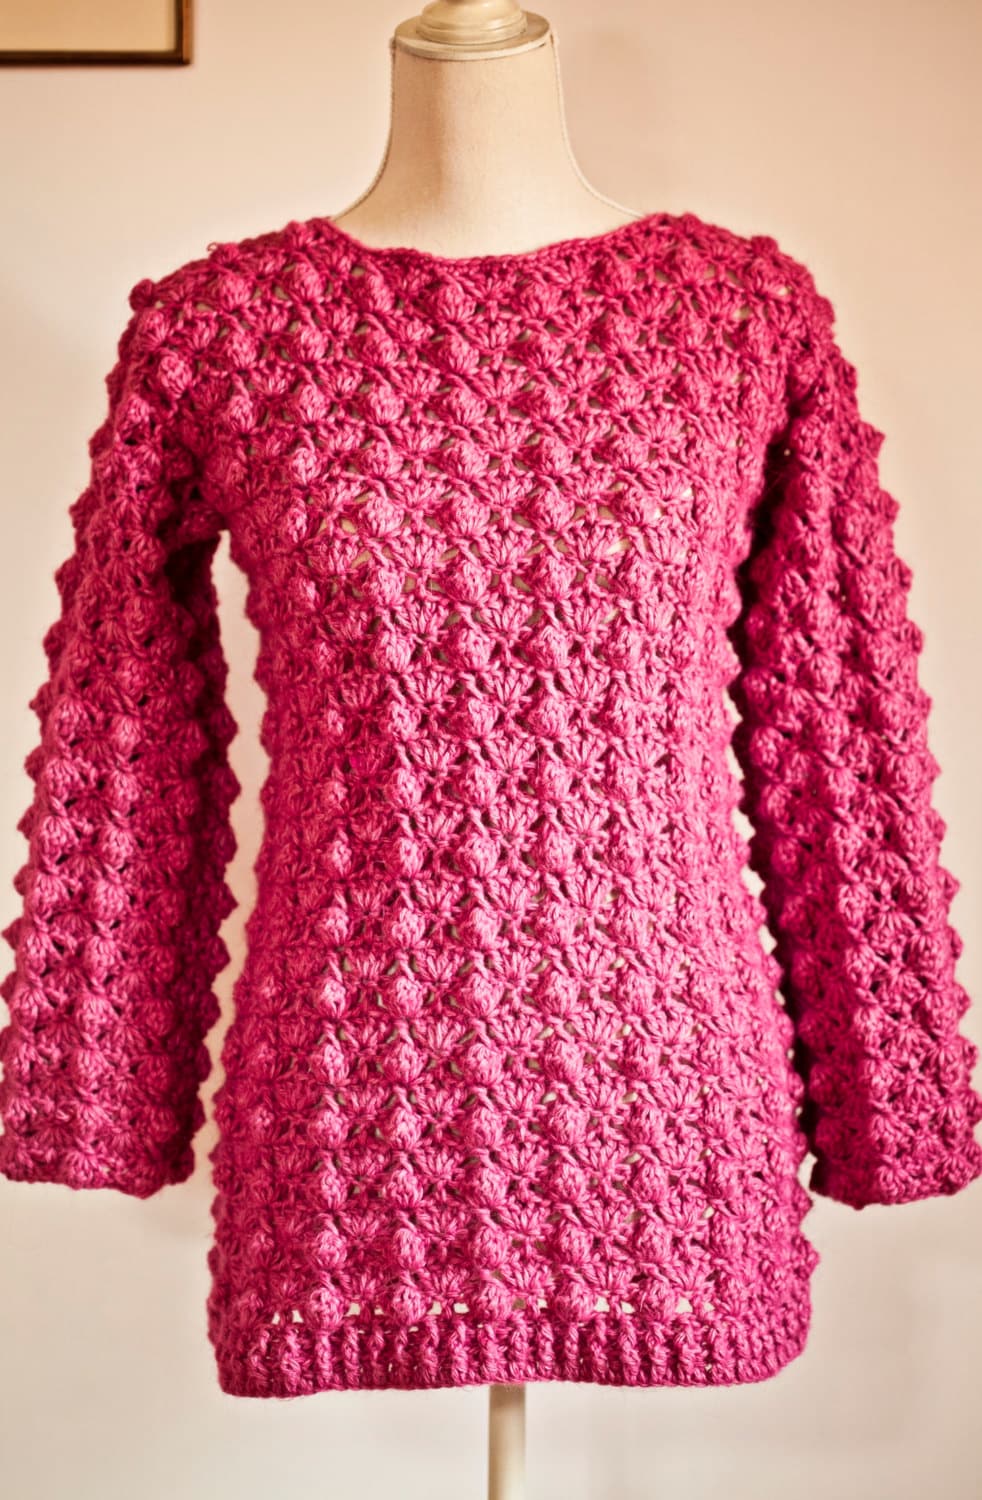 PART ~8~ New Knitting Pattern For Ladies Jacket/Cardigan and Sweater Design  # 480 Mudhe ki Bunai - YouTube